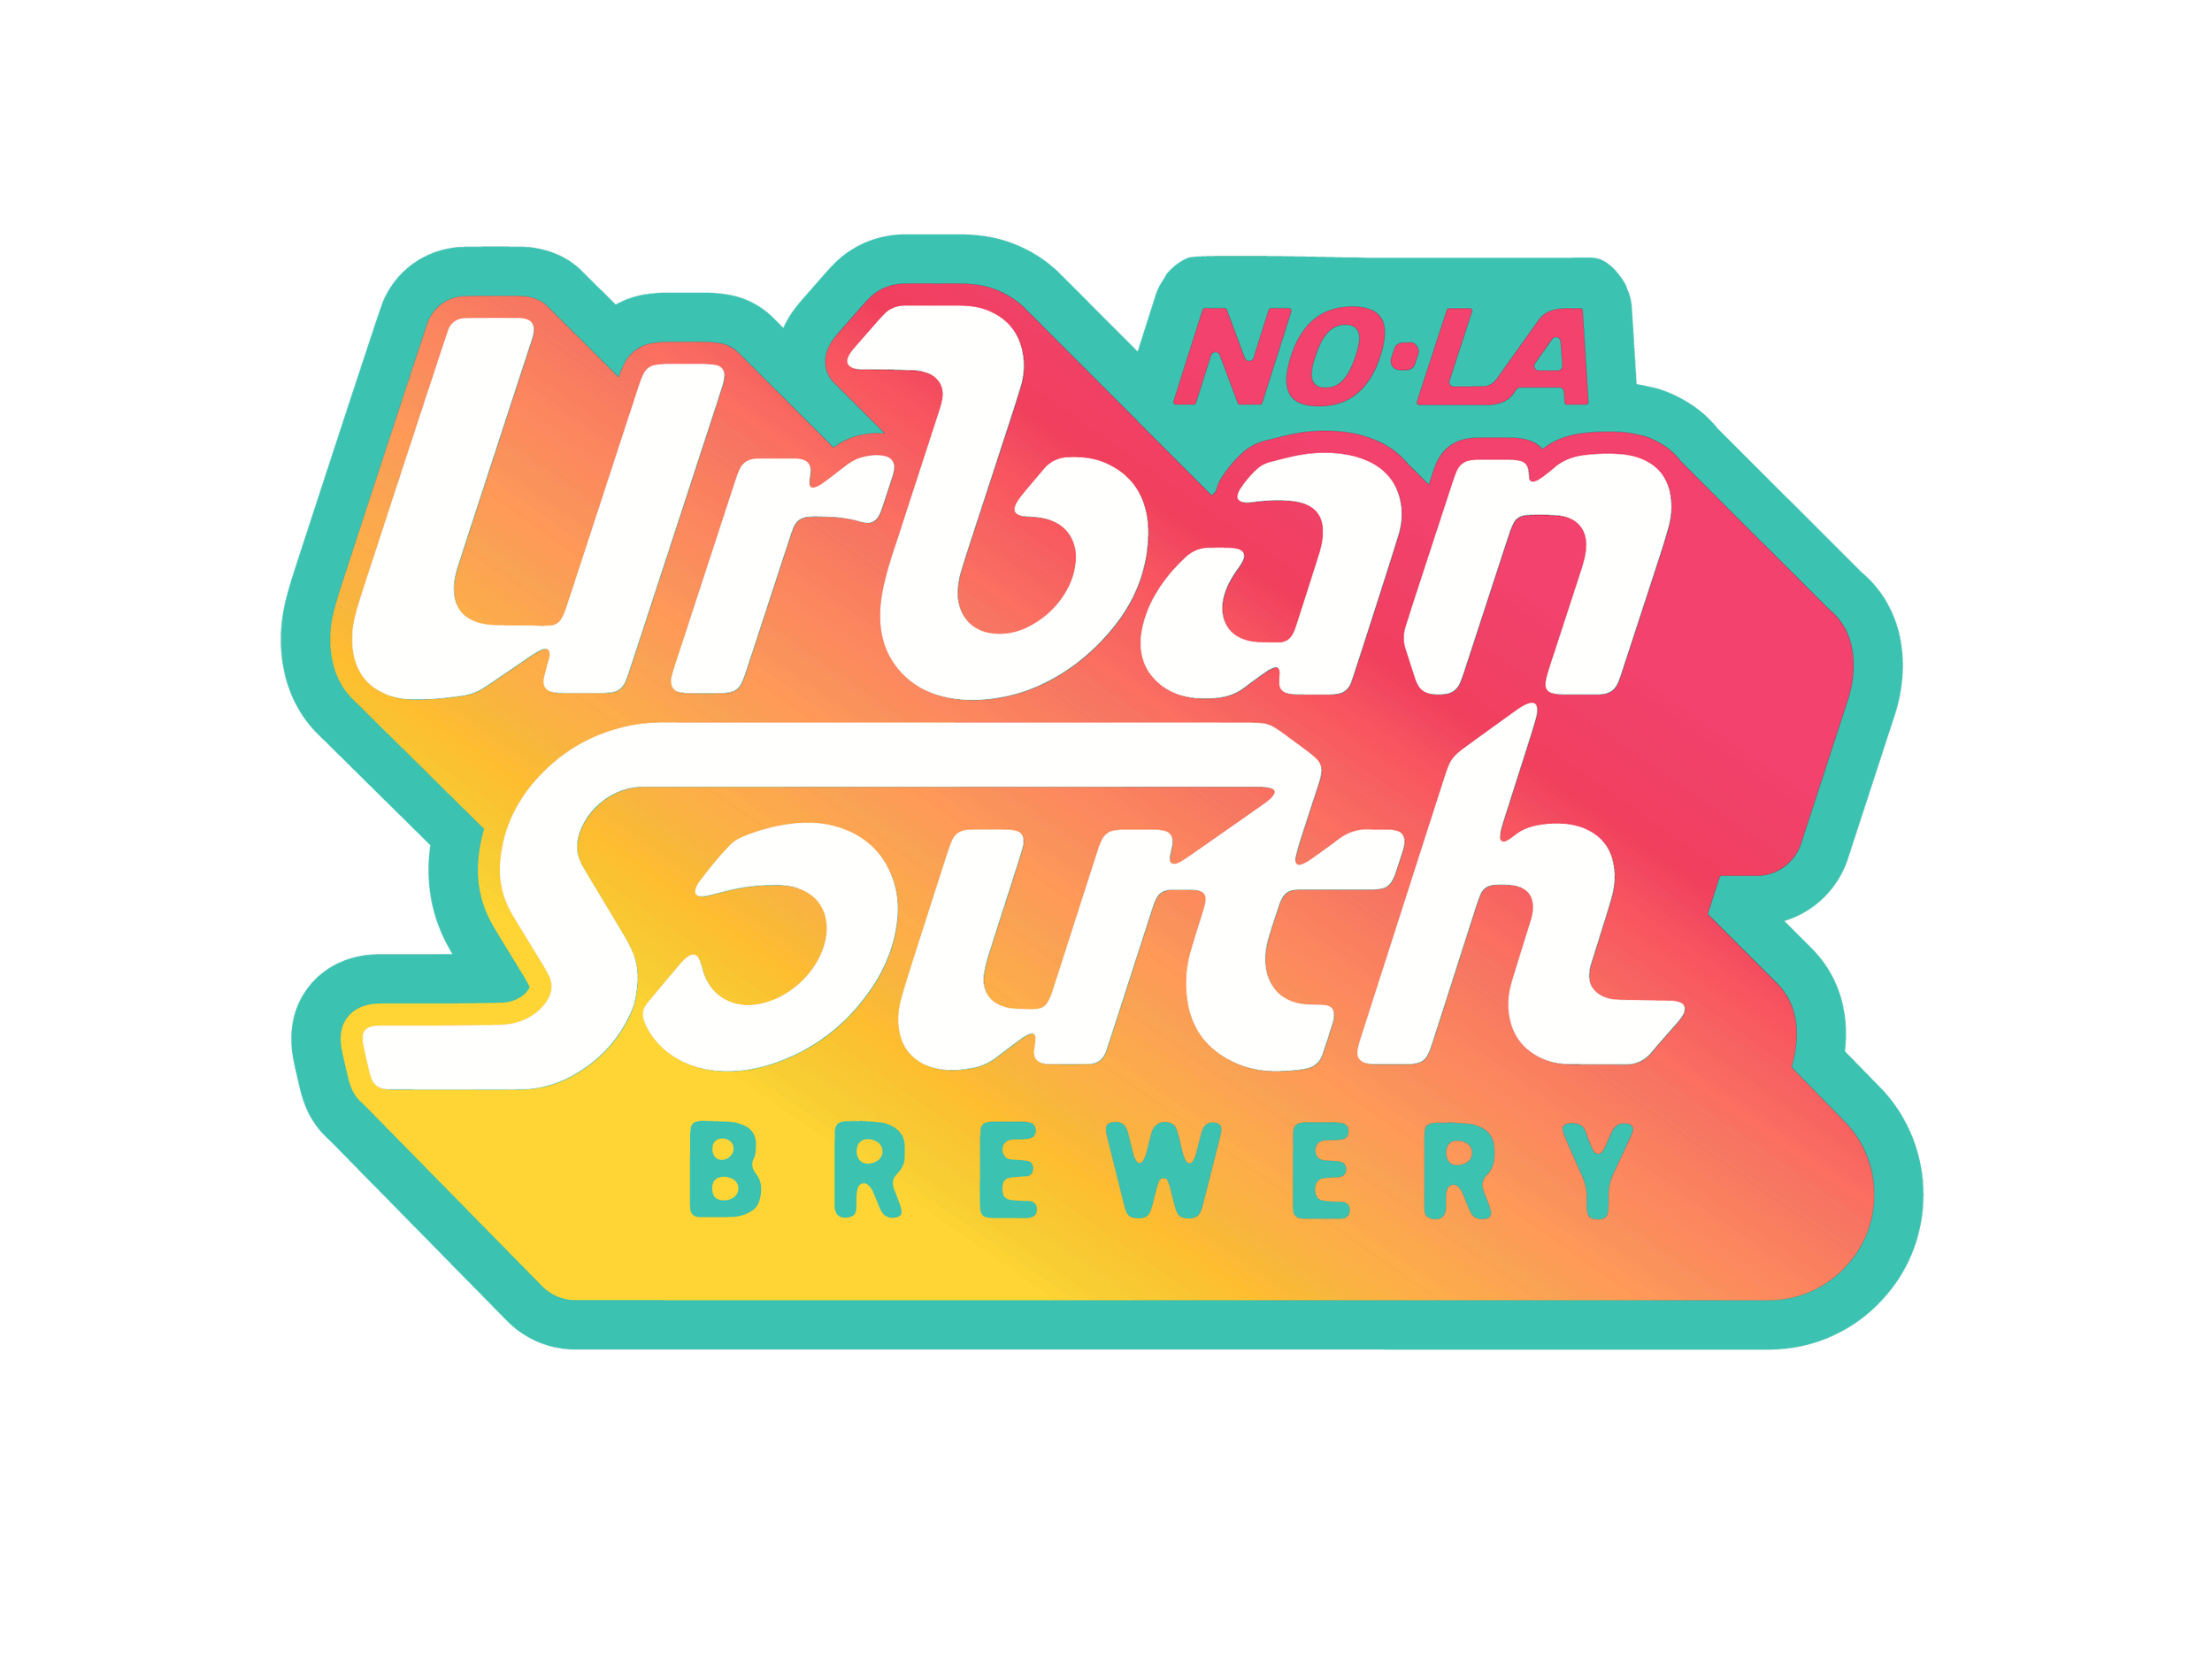 URBAN_SOUTH_nola_logo.png